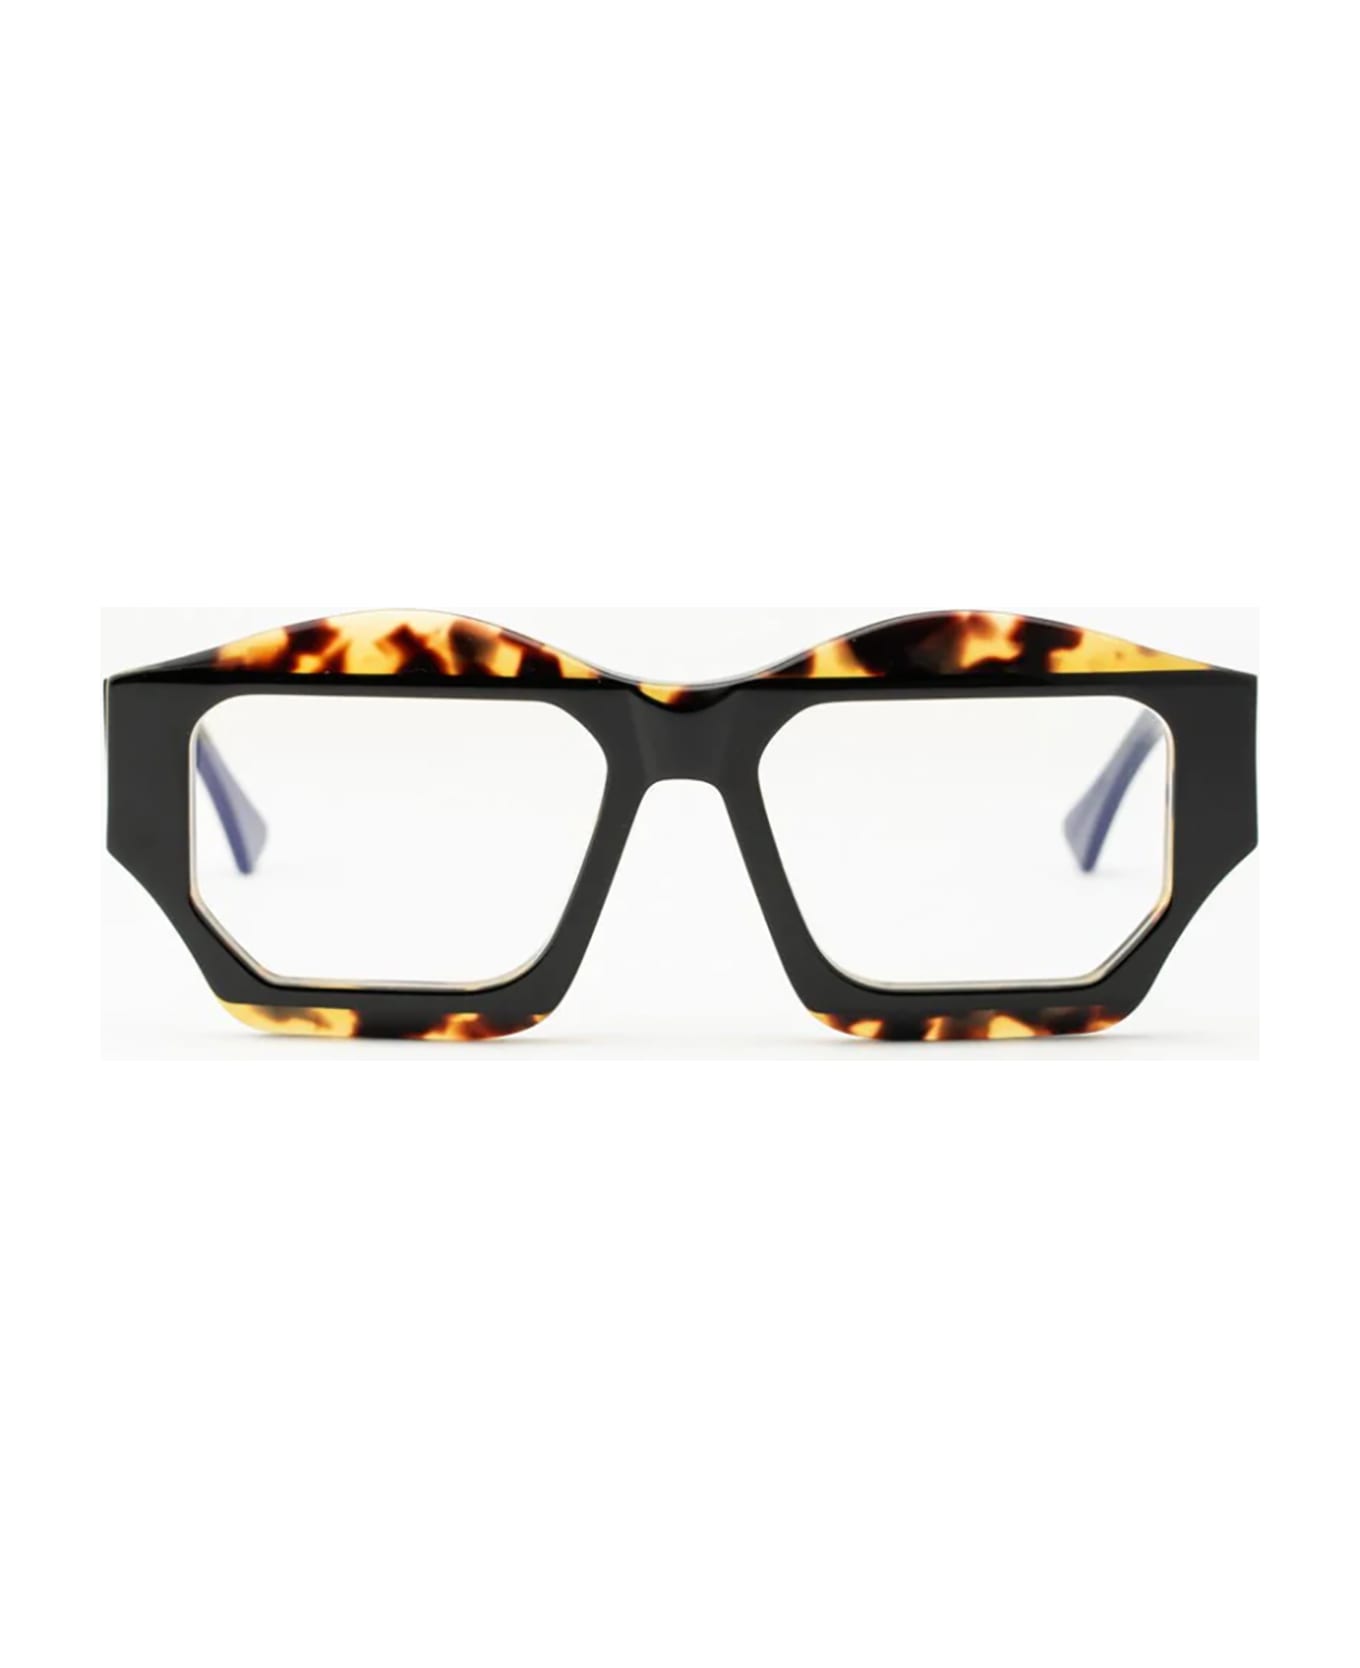 Kuboraum F4 Eyewear - Hbs